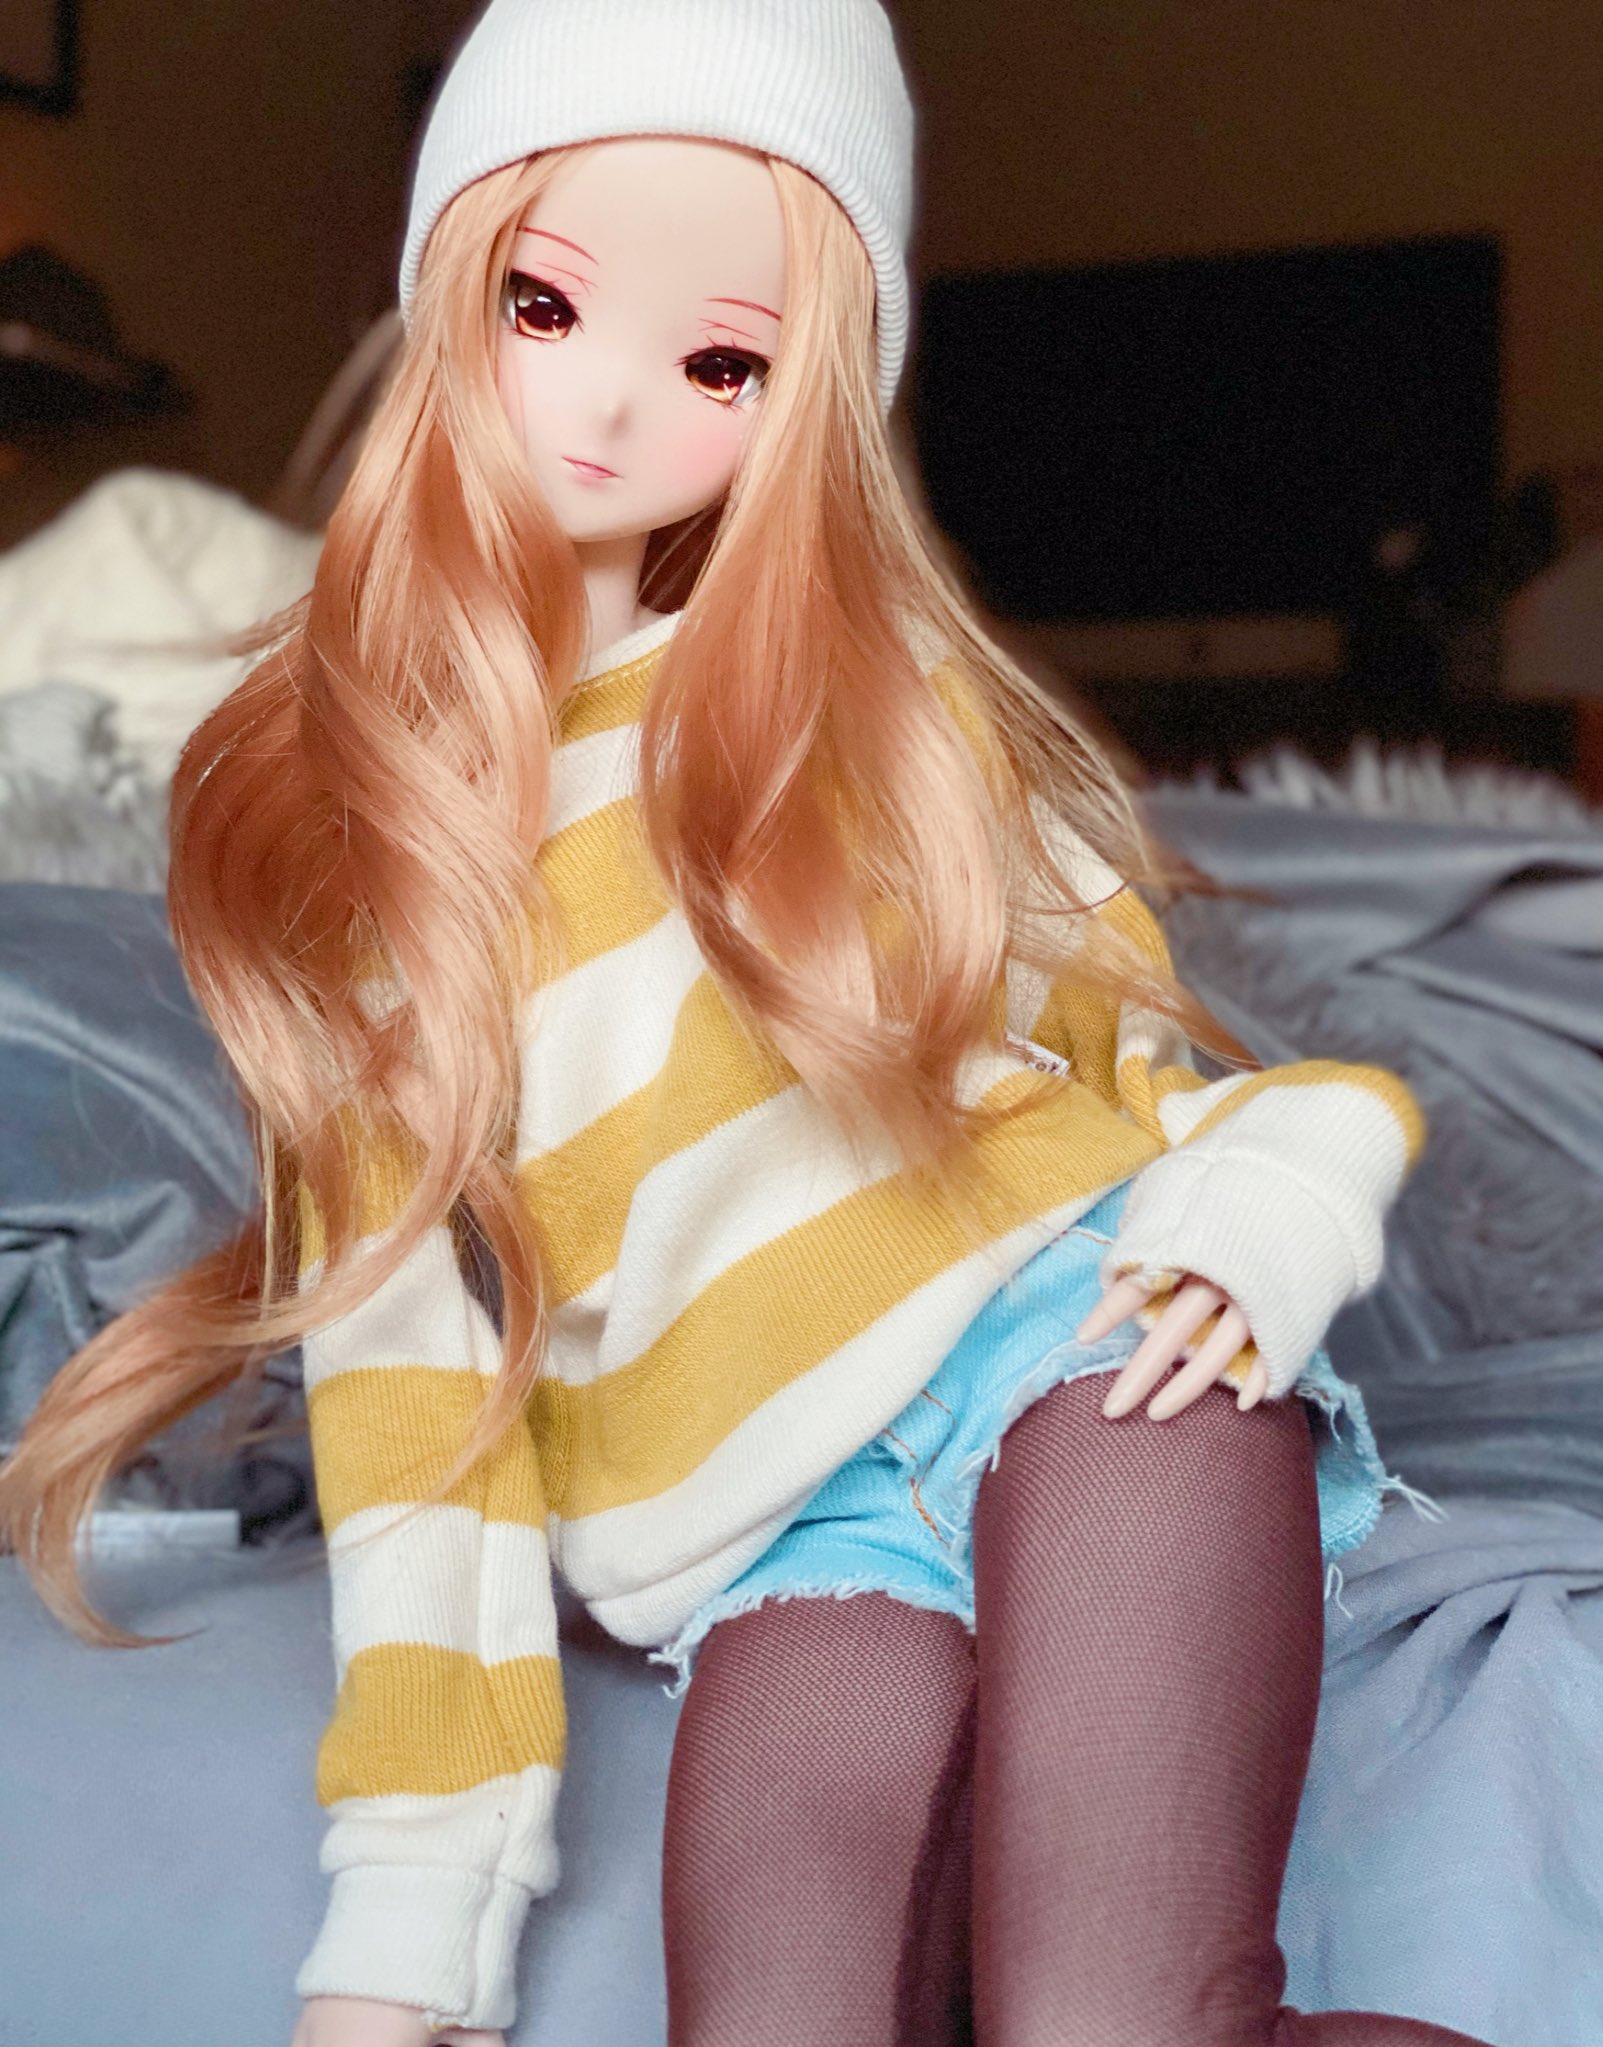 therealmoftoys on Twitter smartdoll bjd anime doll japanese girl  kpop fashion kawaii httpstcoSDULSI32On  Twitter